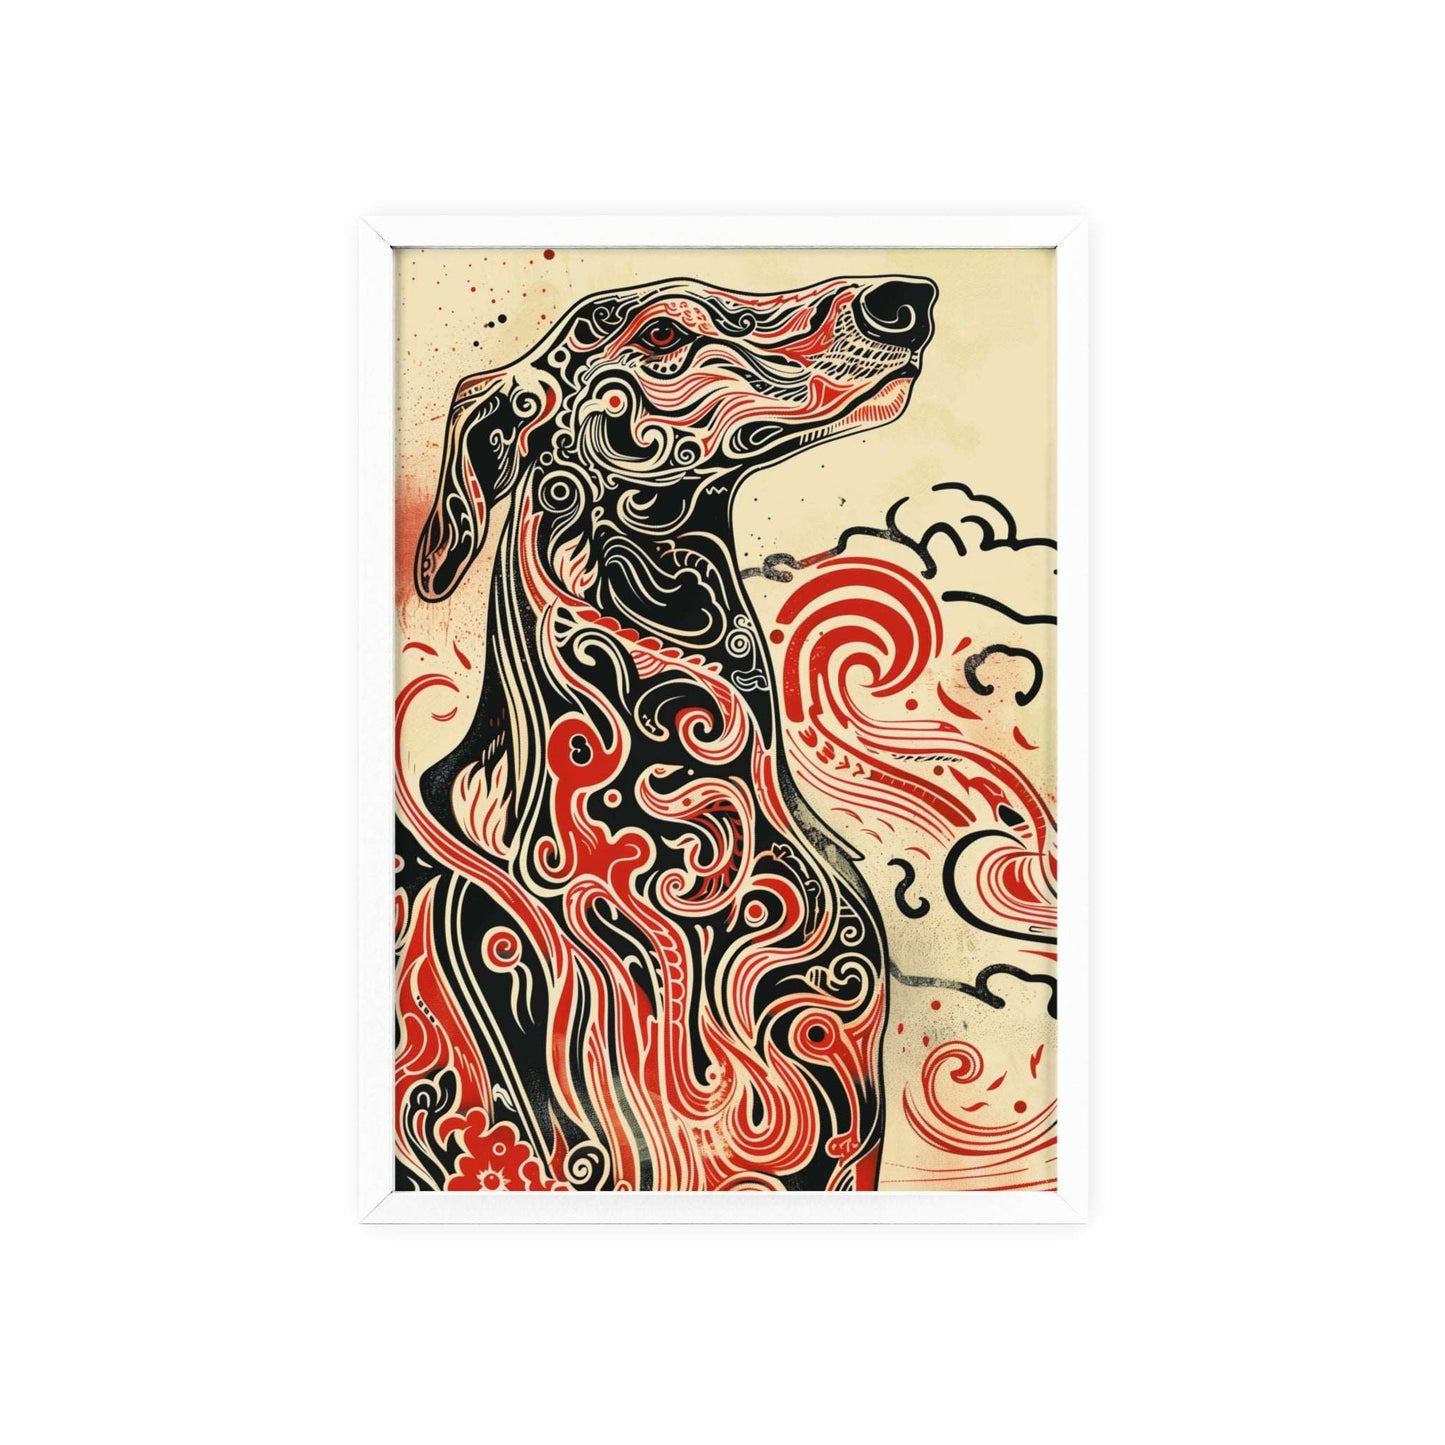 dog poster, animal art, bold design, black and red, wildlife decor, intricate patterns, majestic dog, nature illustration, wall art, dynamic artwork